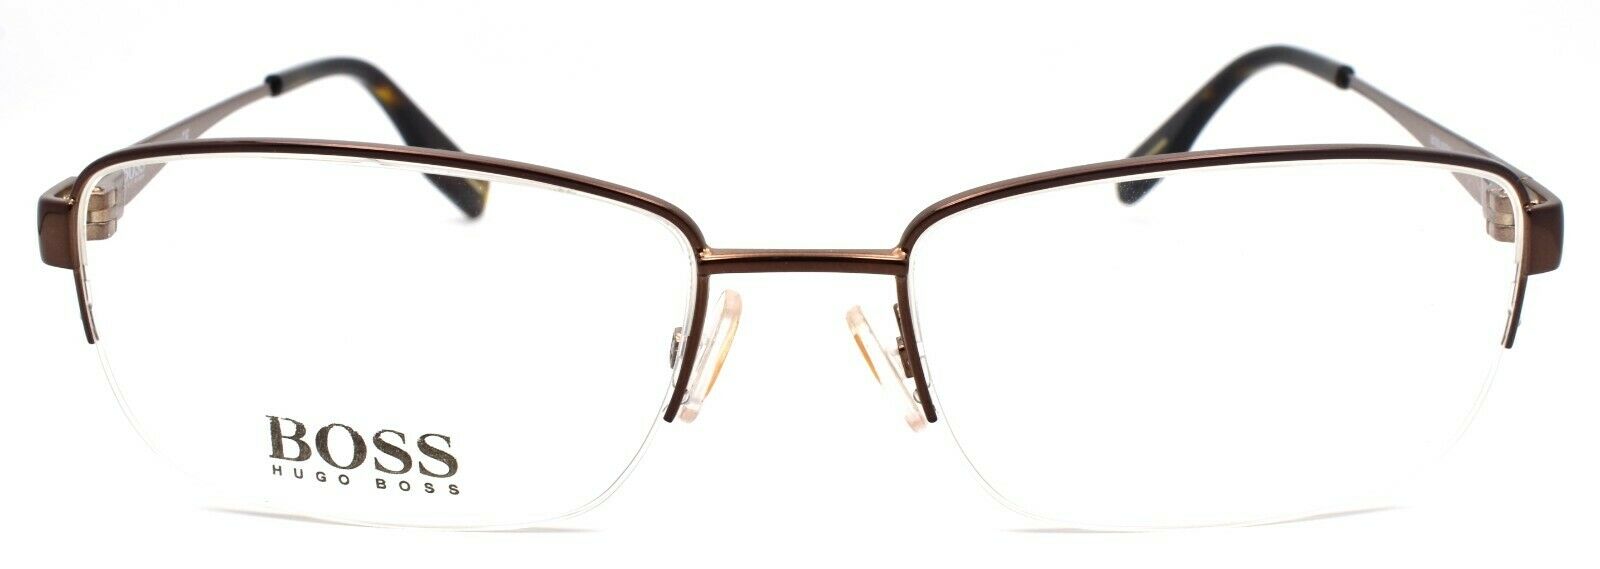 2-BOSS by Hugo Boss 0079/U 7S9 Men's Eyeglasses Frames Half Rim 53-17-140 Brown-780073002254-IKSpecs